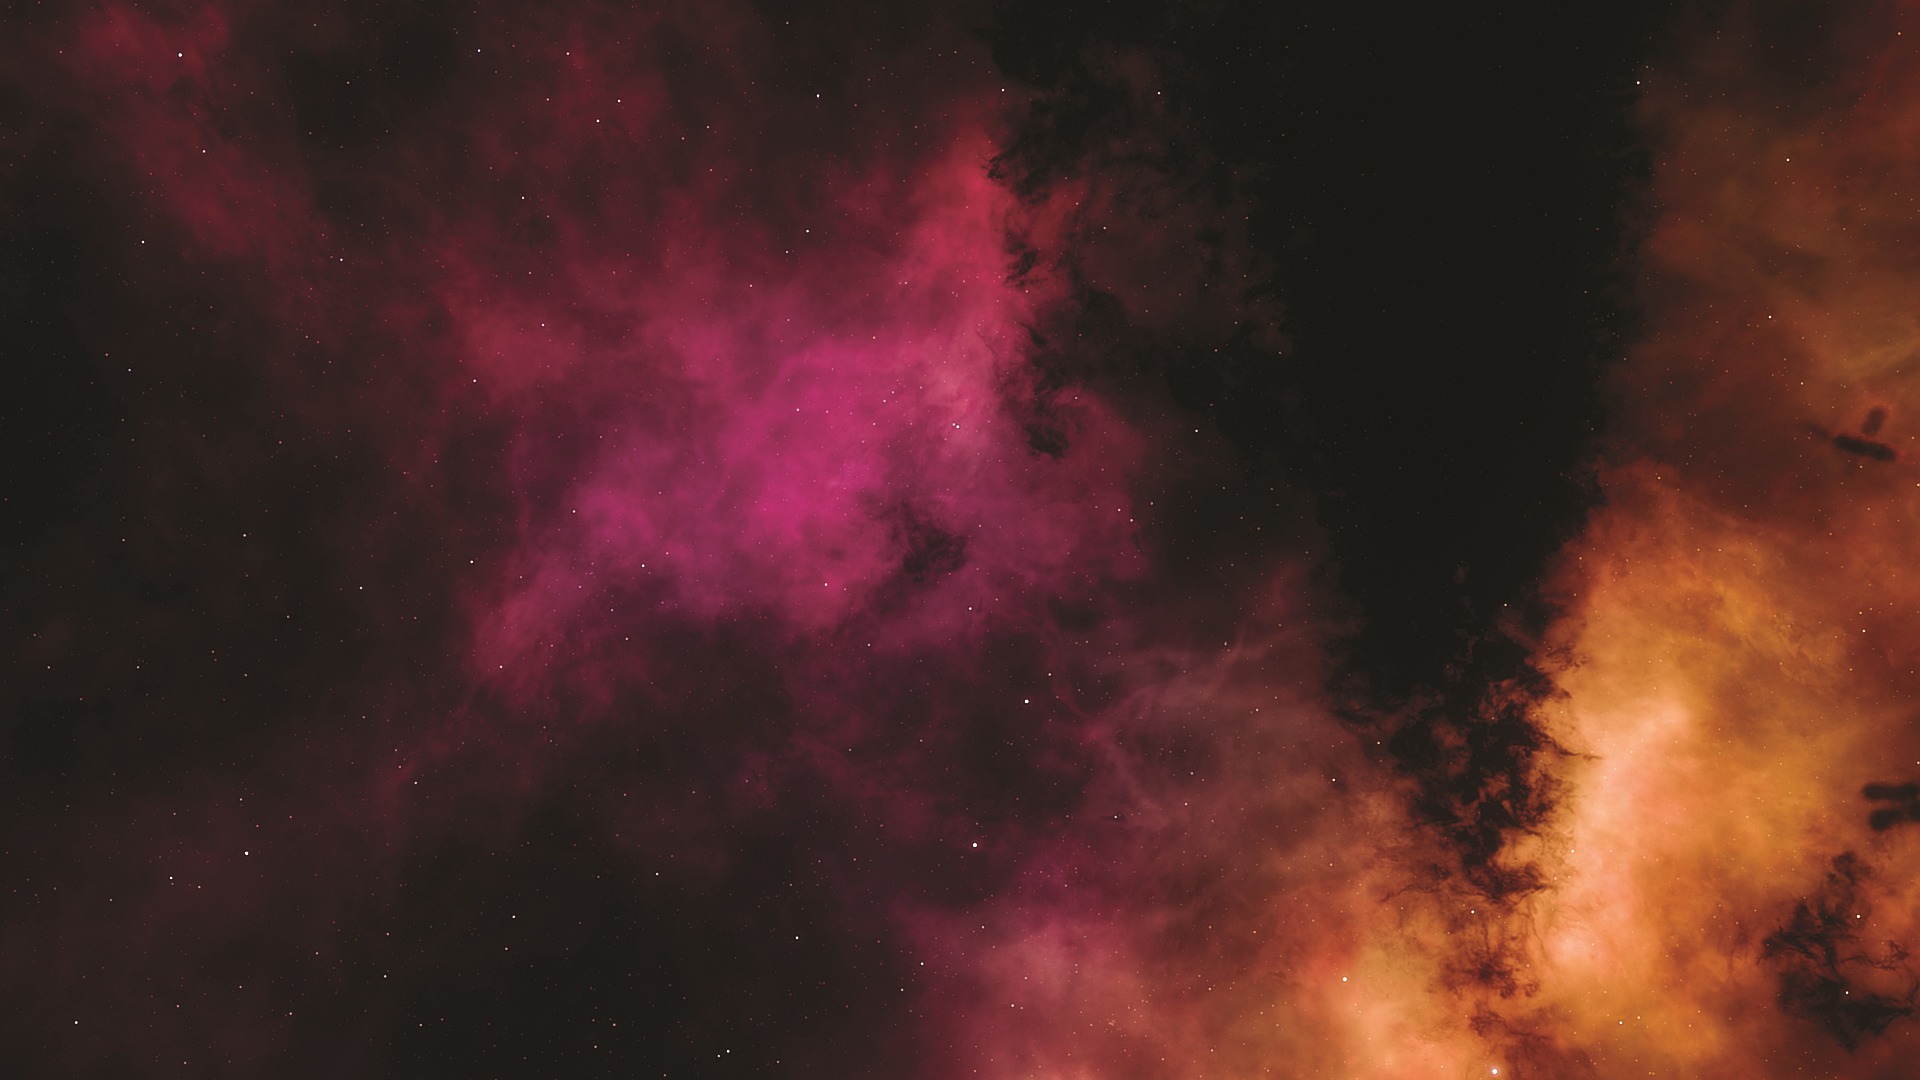 Black space with pink and orange nebula